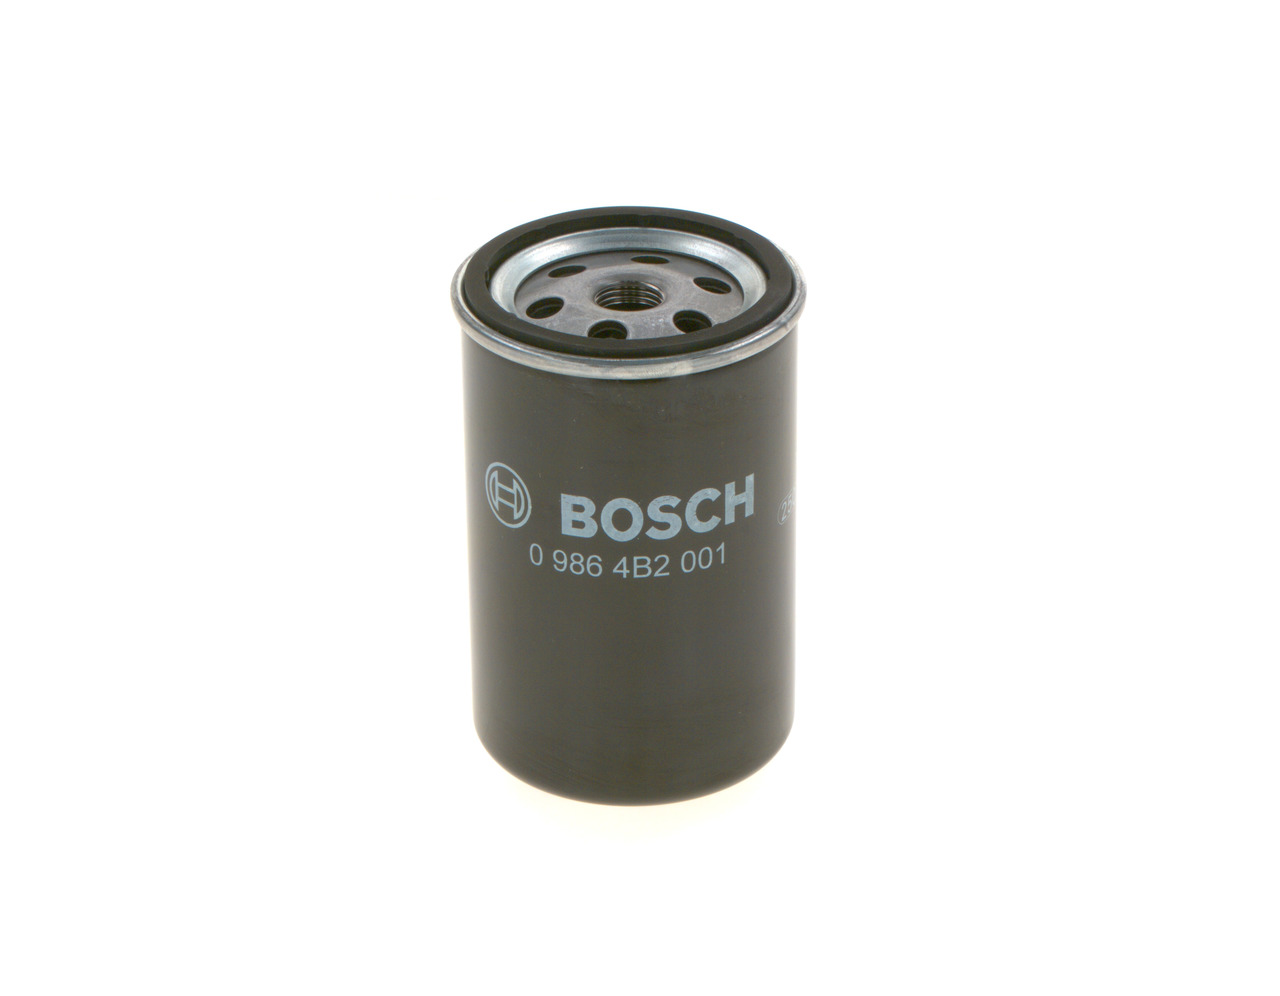 NM 001 BOSCH 09864B2001 Fuel filter 190 8312